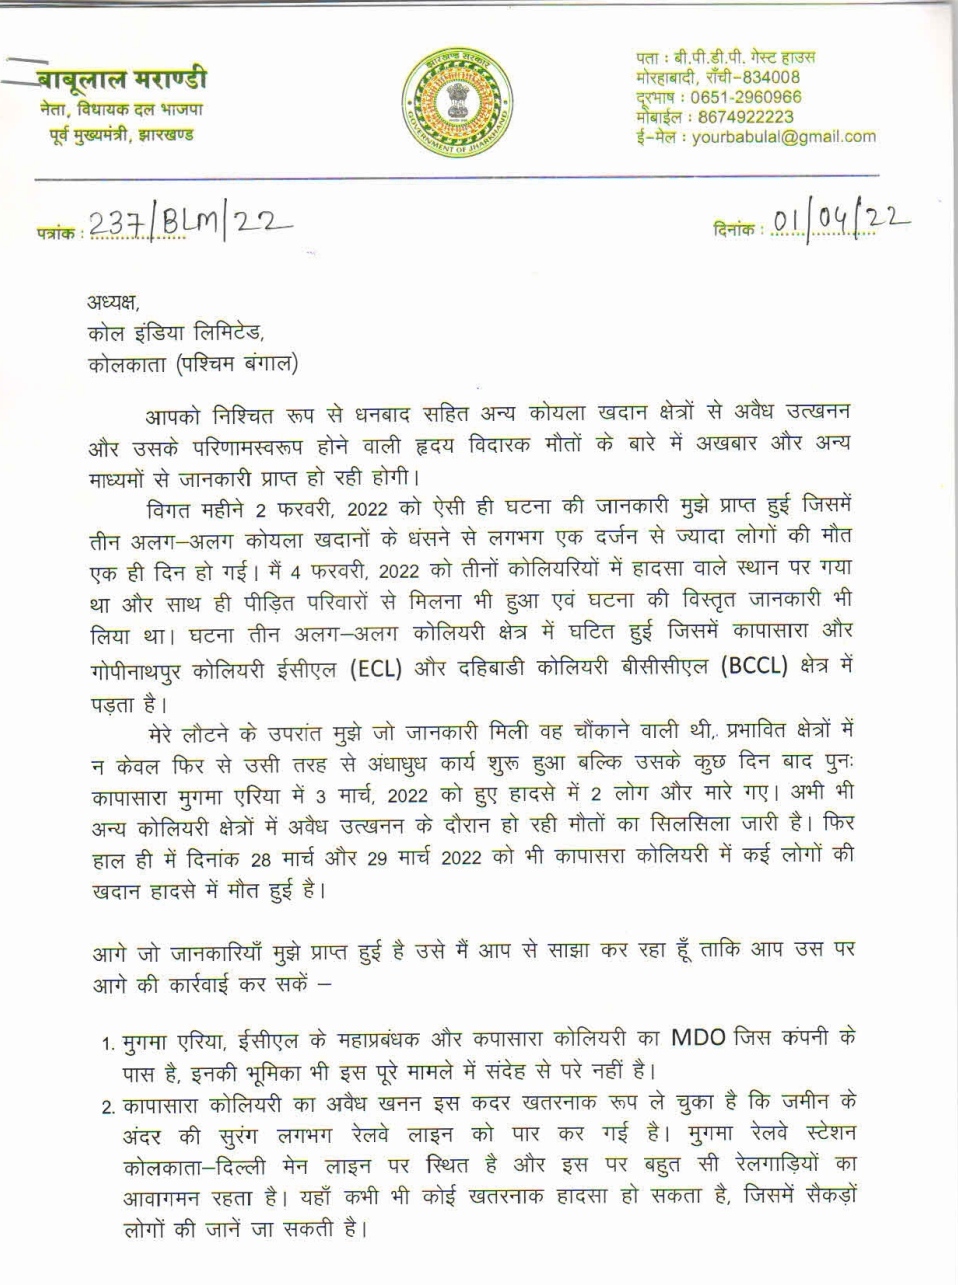 Babulal Marandi wrote letter to Chairman of Coal India Limited